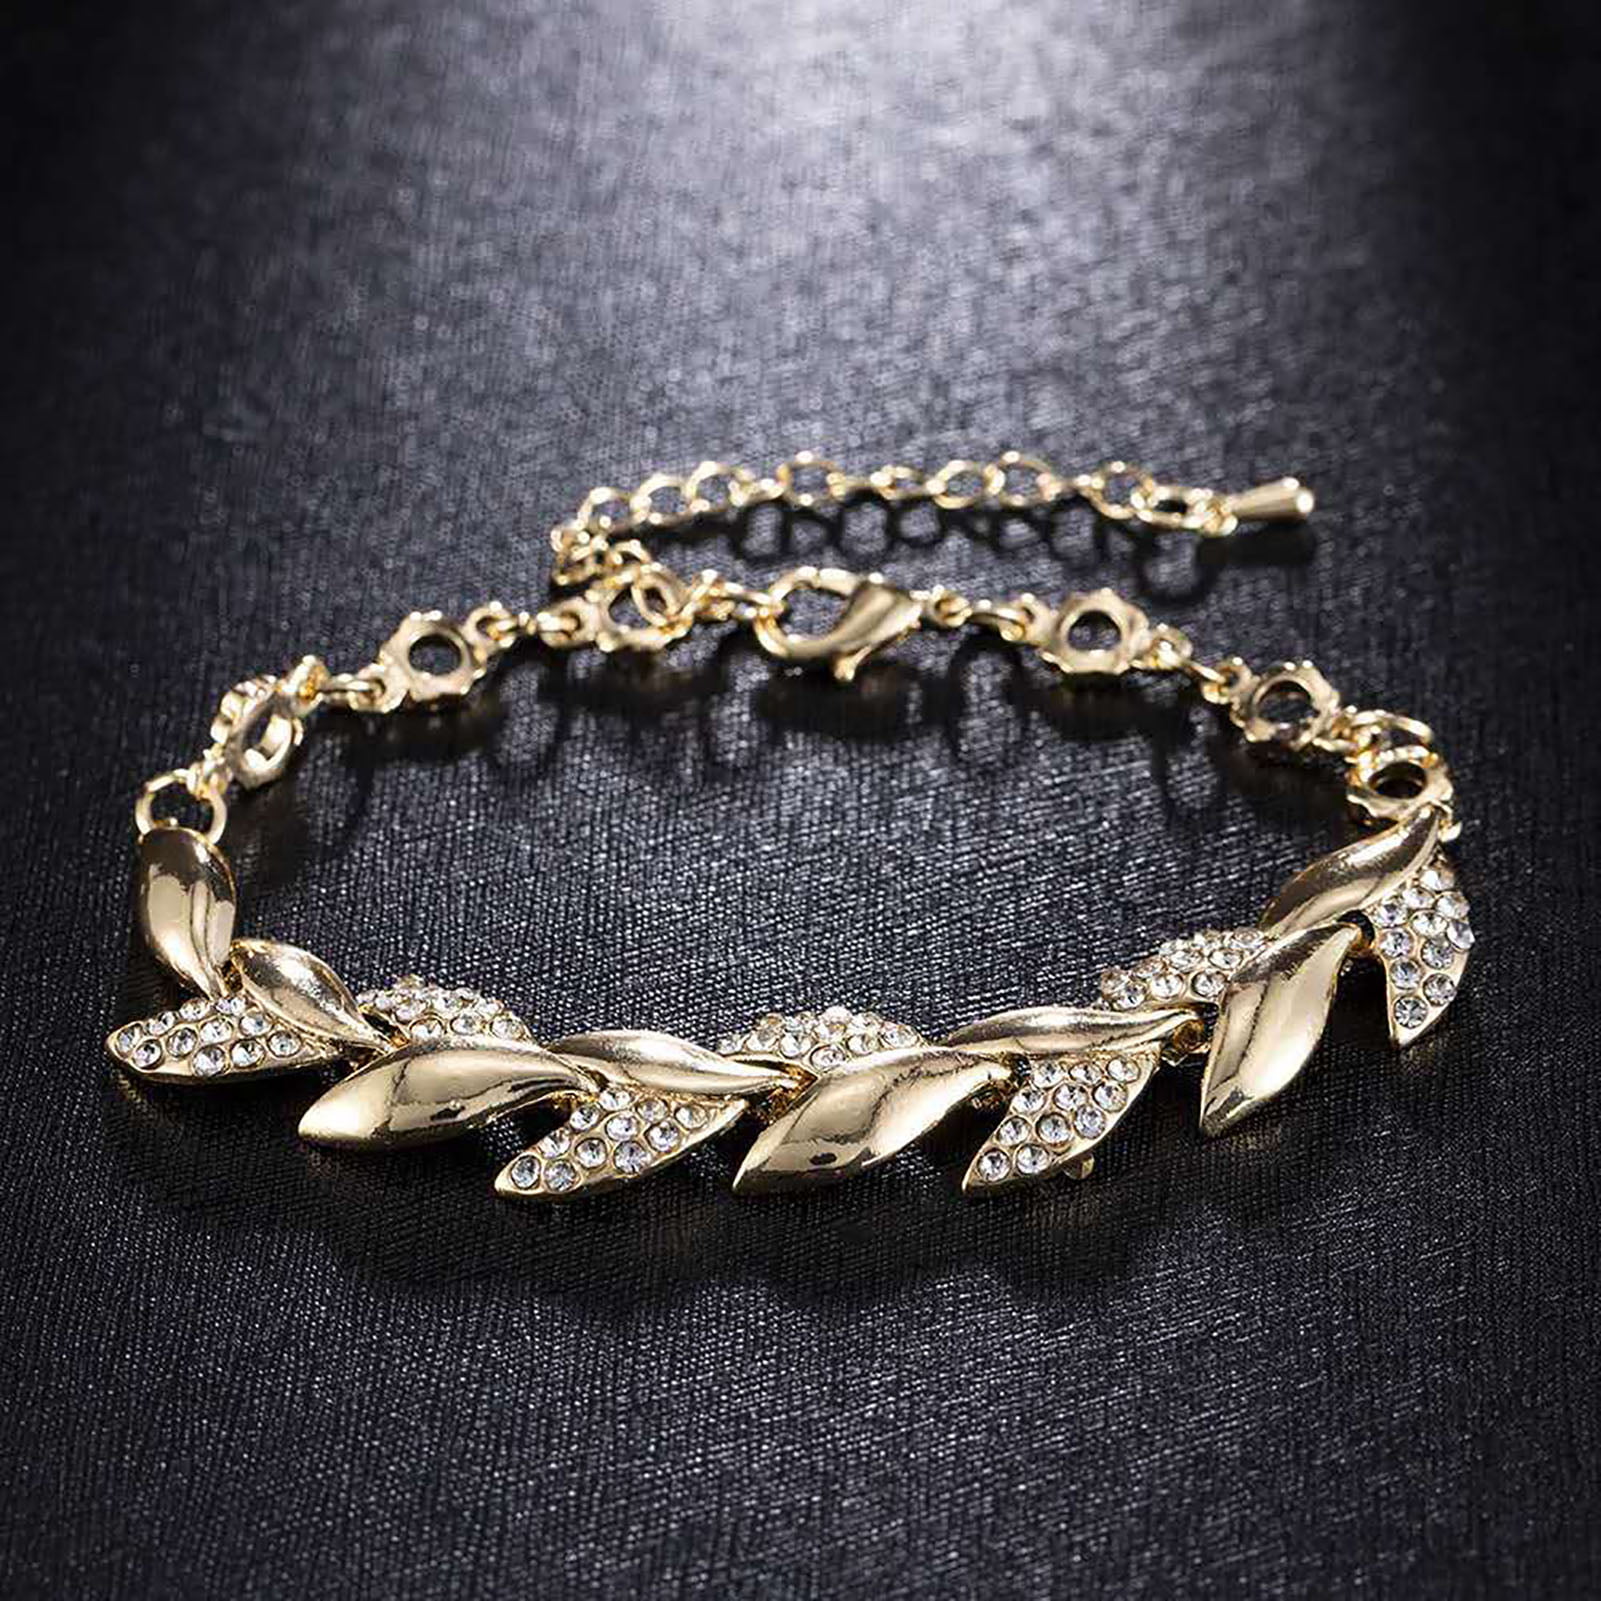 Stainless Steel 4 leaf clover charm bracelet 18 cm 2 in 7.09 in plus 5 cm ext 